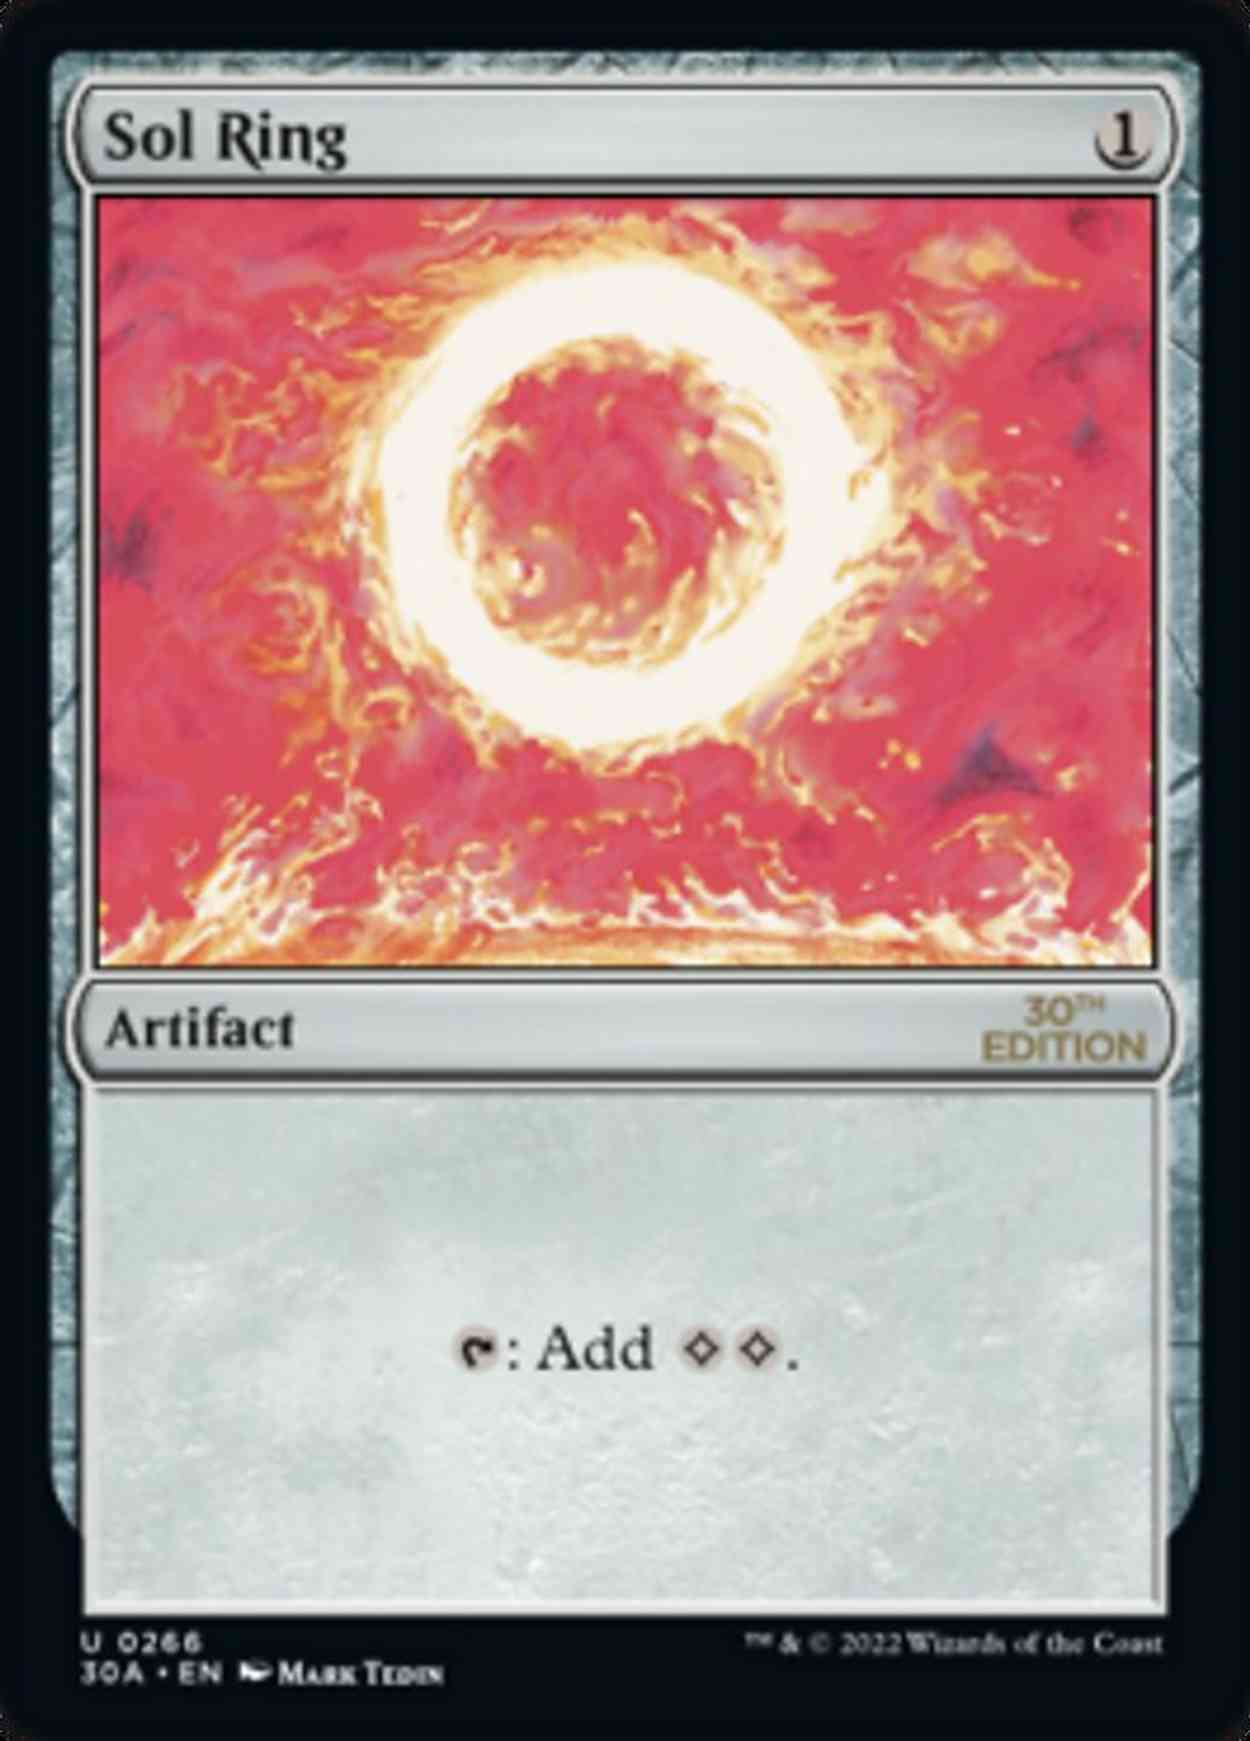 Sol Ring (266) magic card front